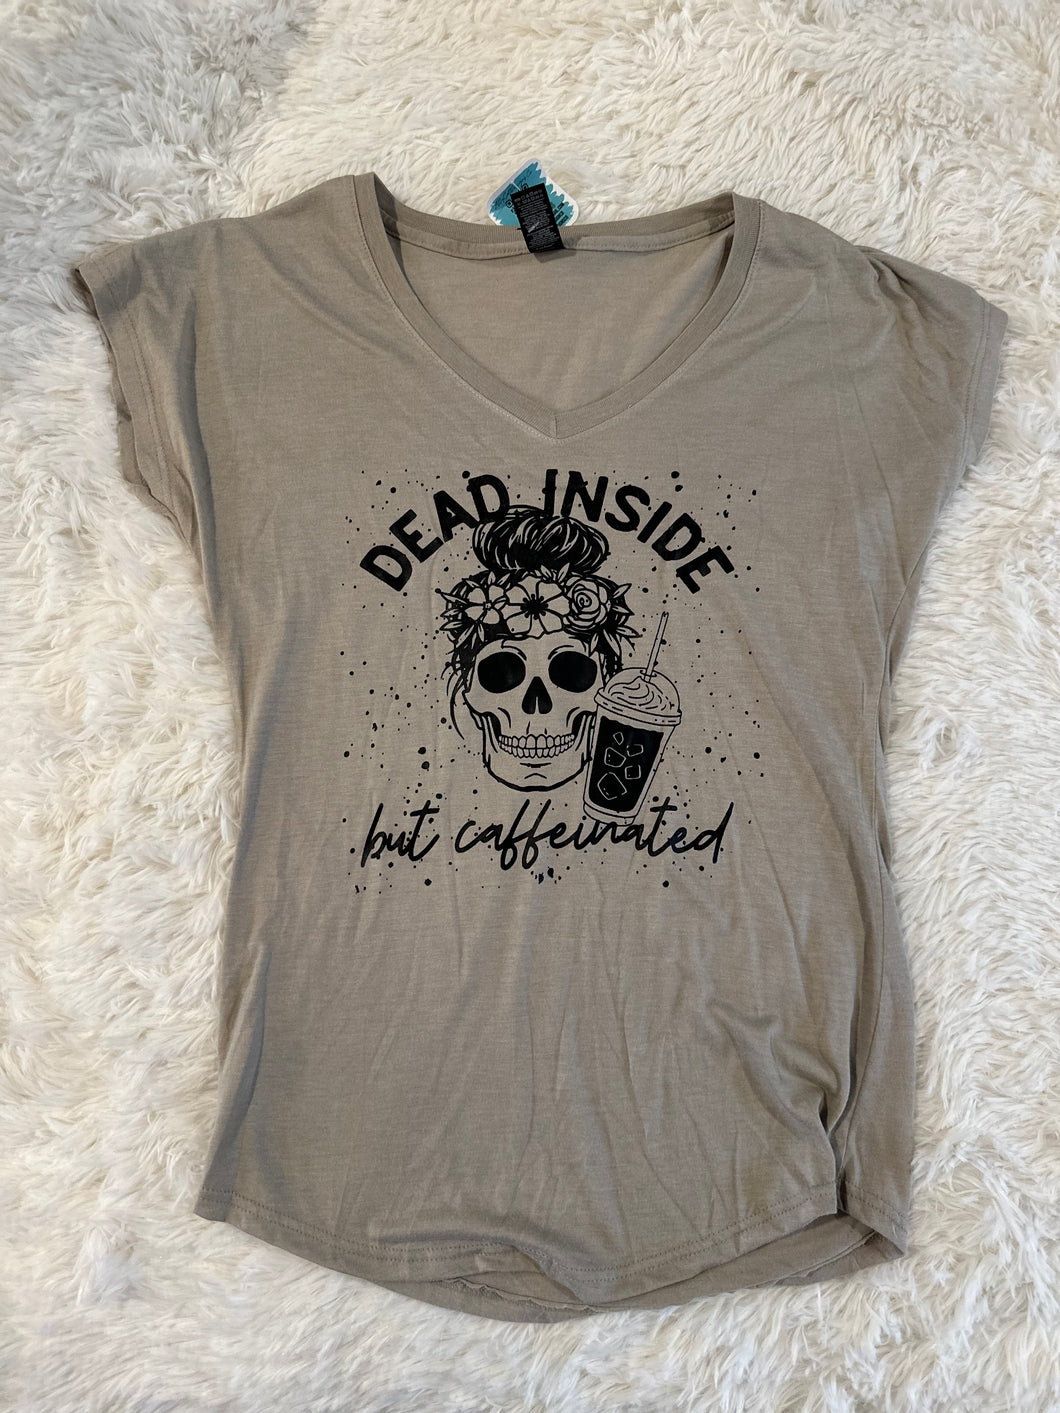 dead inside, but caffeinated v neck T-shirt - SMALL